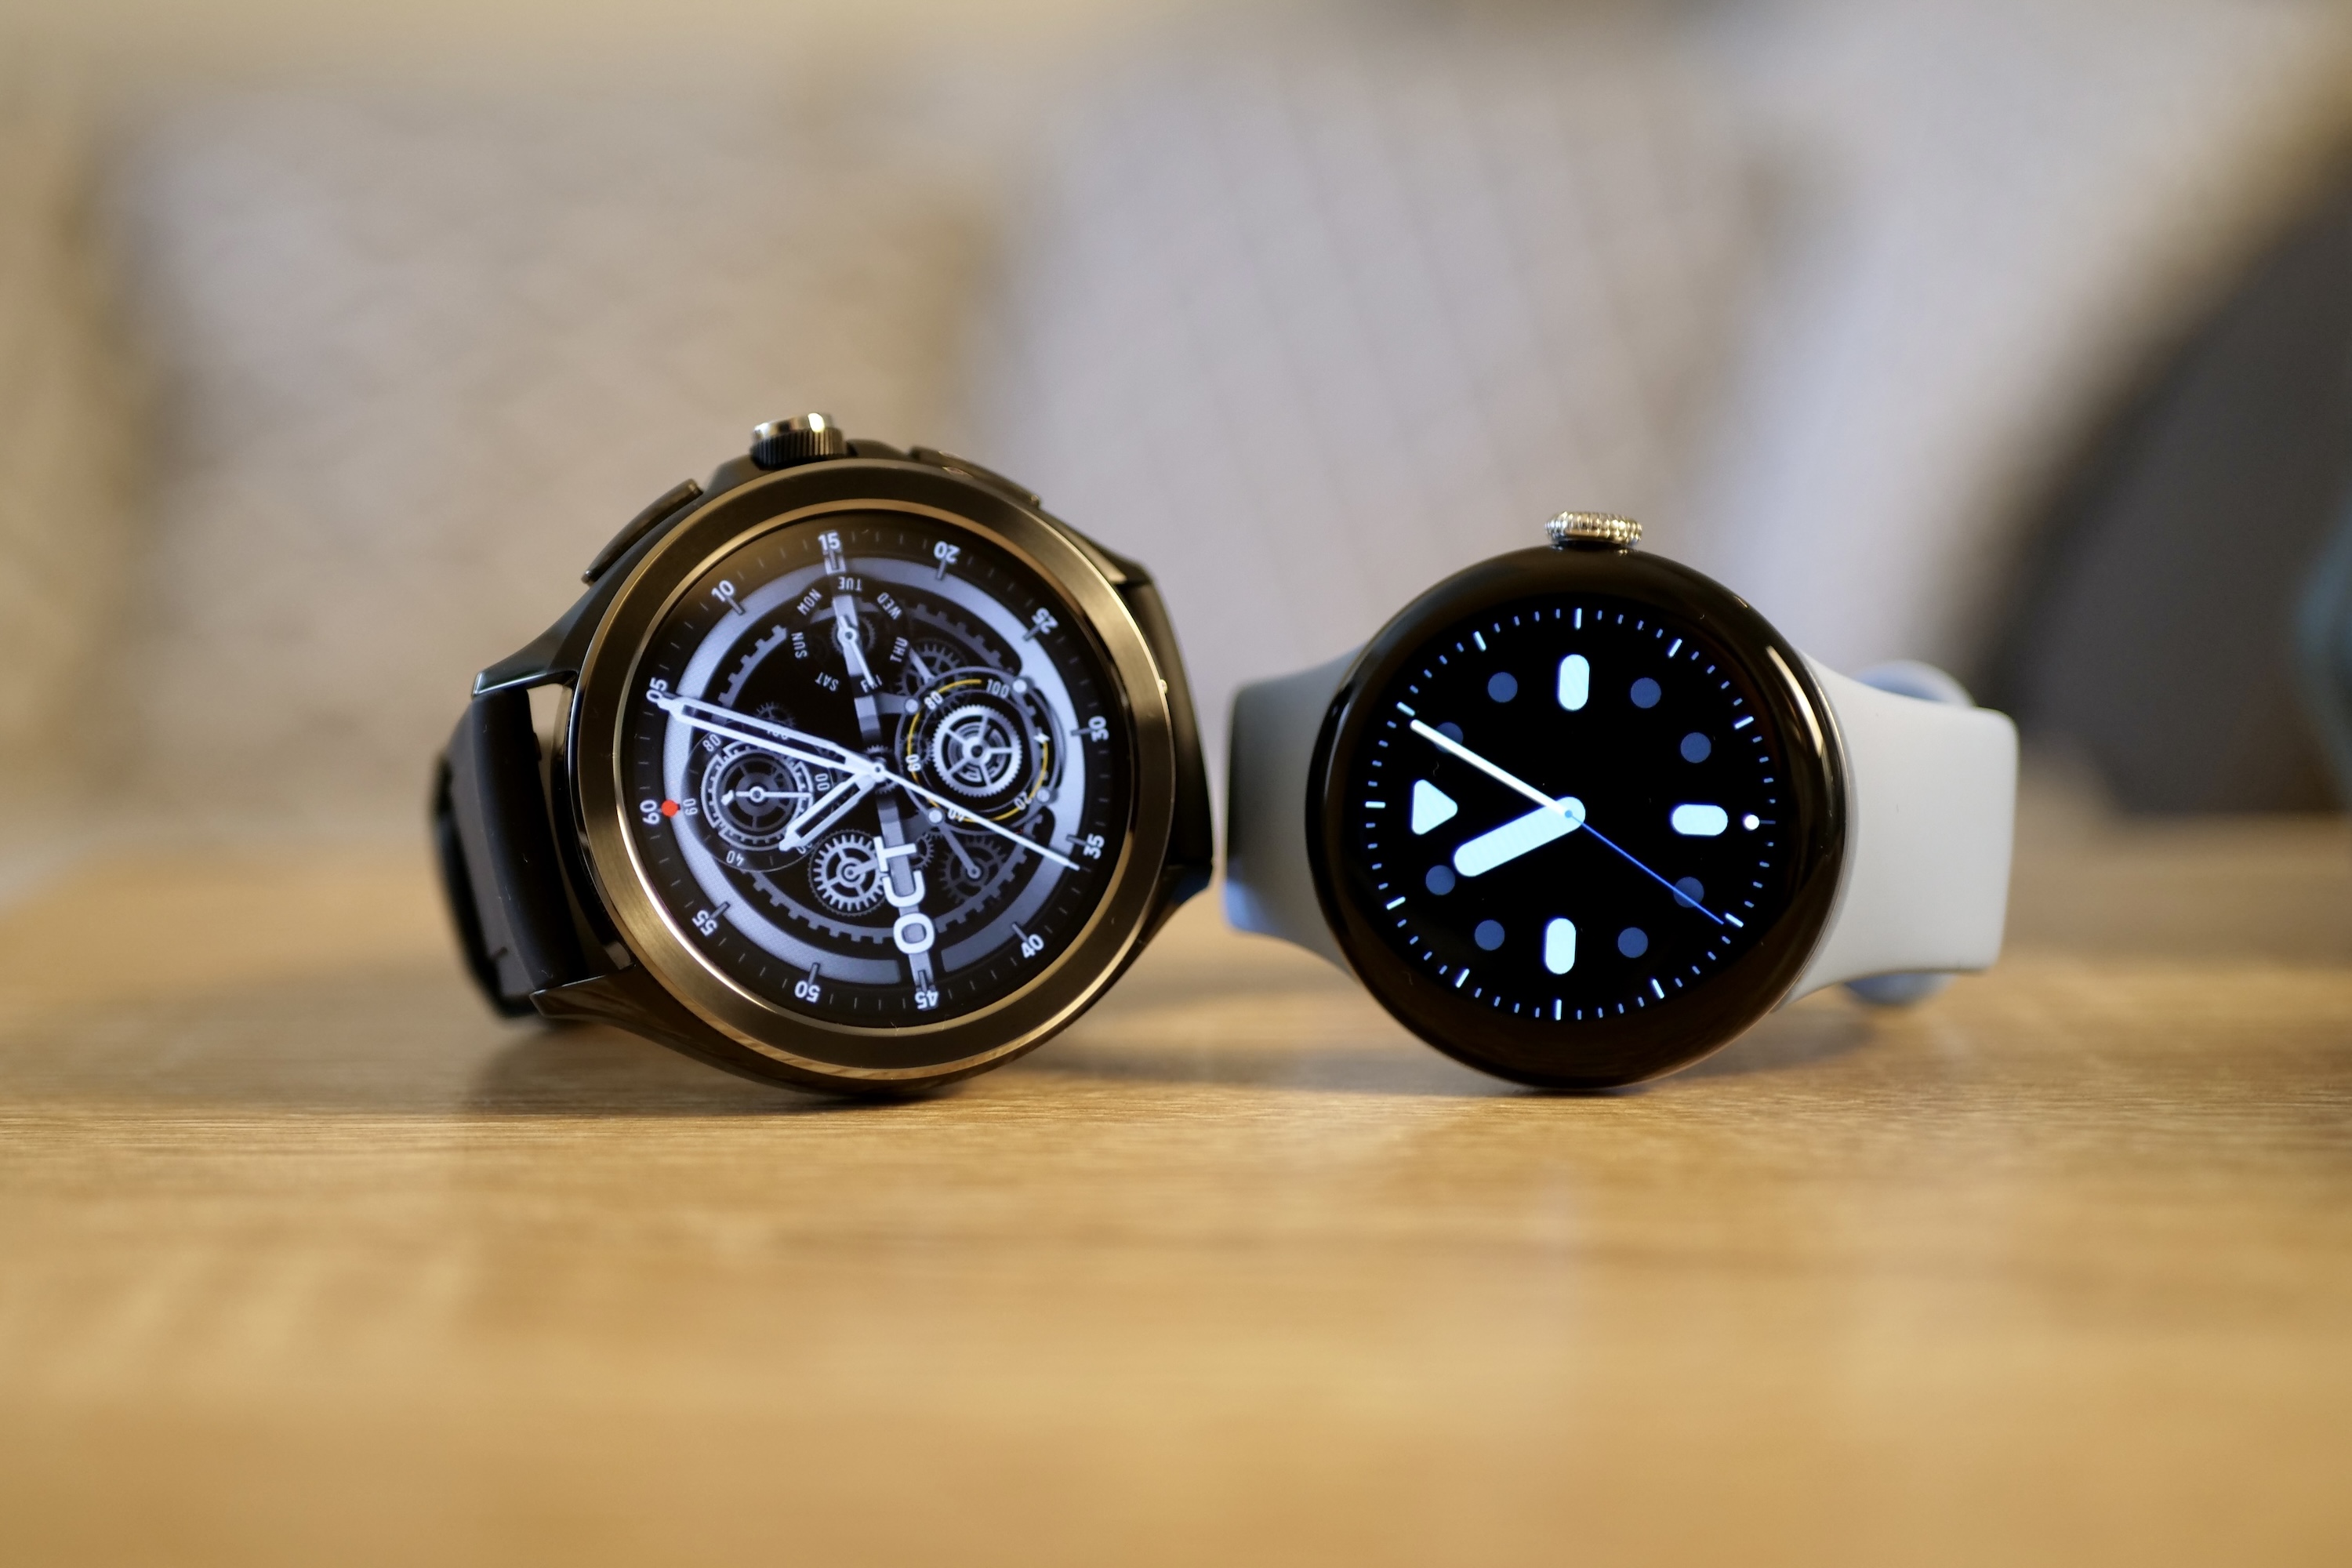 Xiaomi Watch 2 Pro review -  news